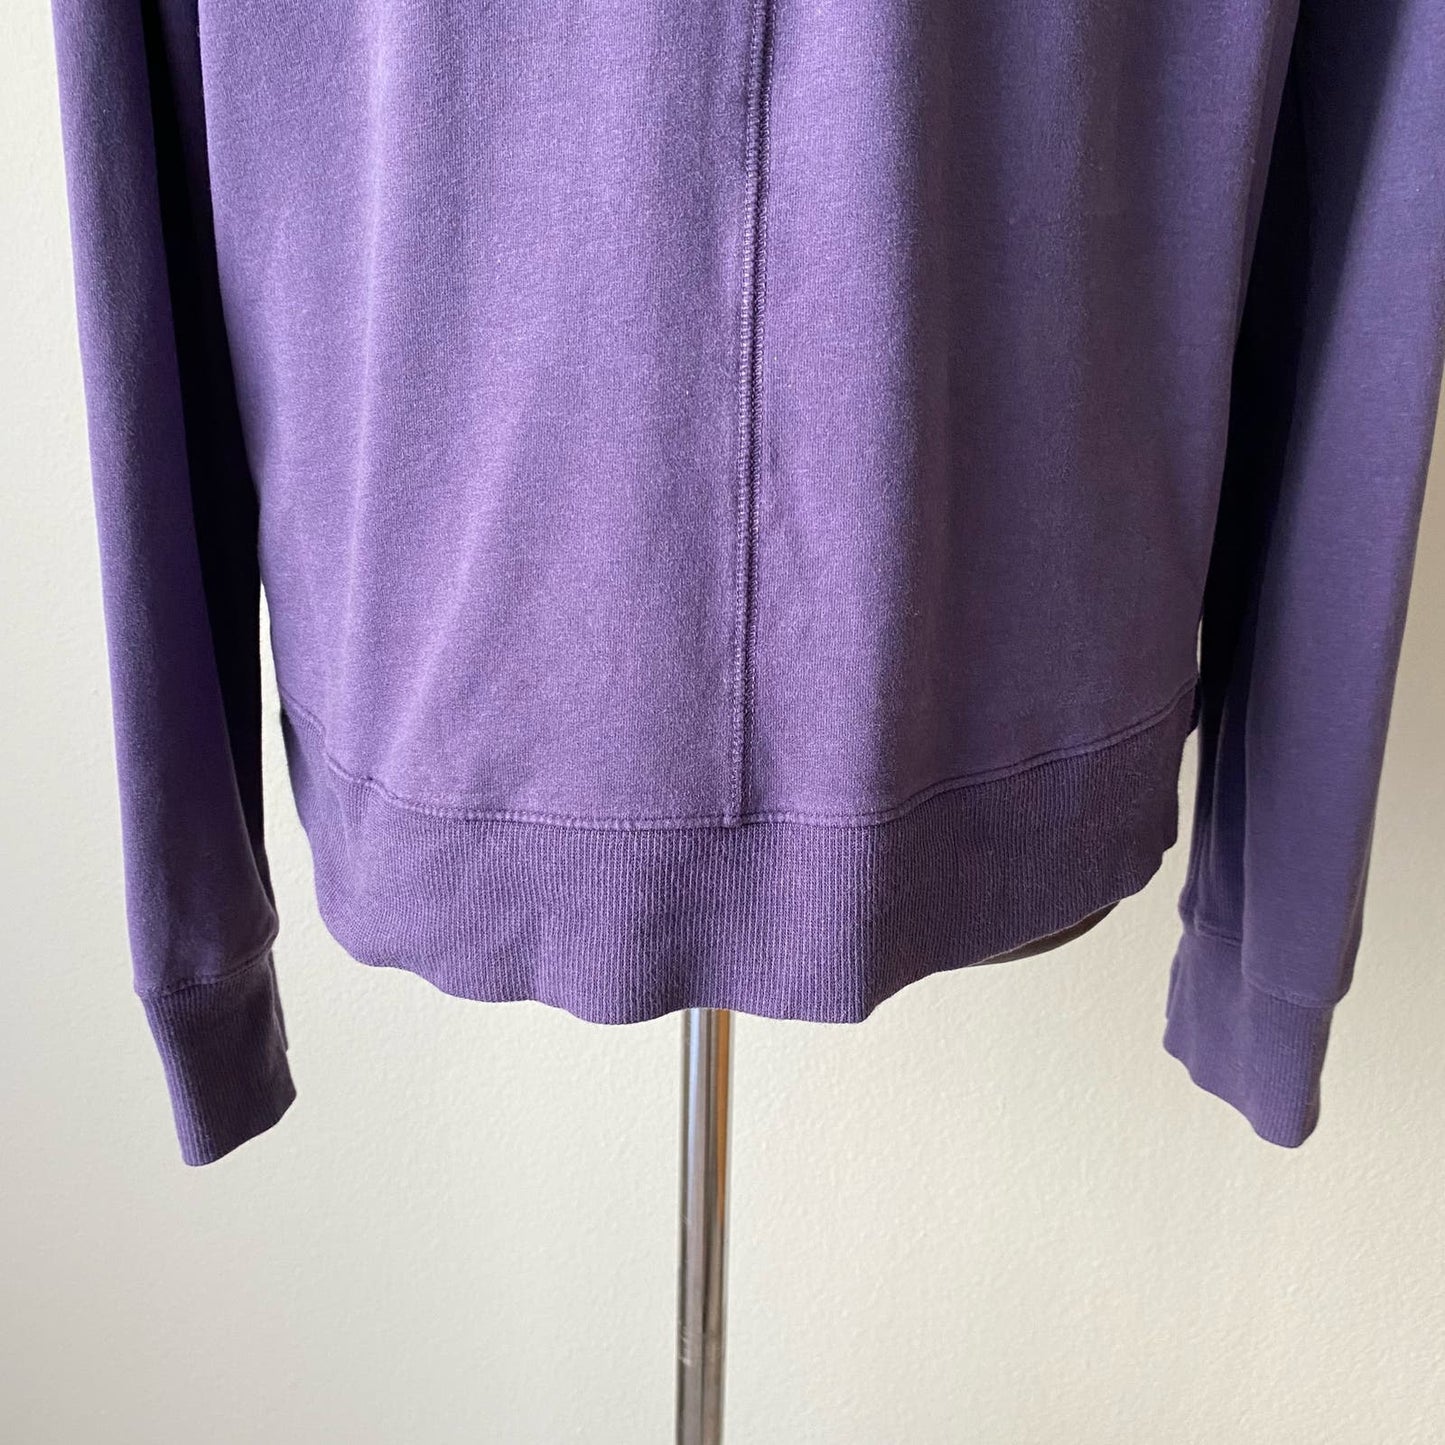 All In Motion sz M crew neck cozy purple sweatshirt